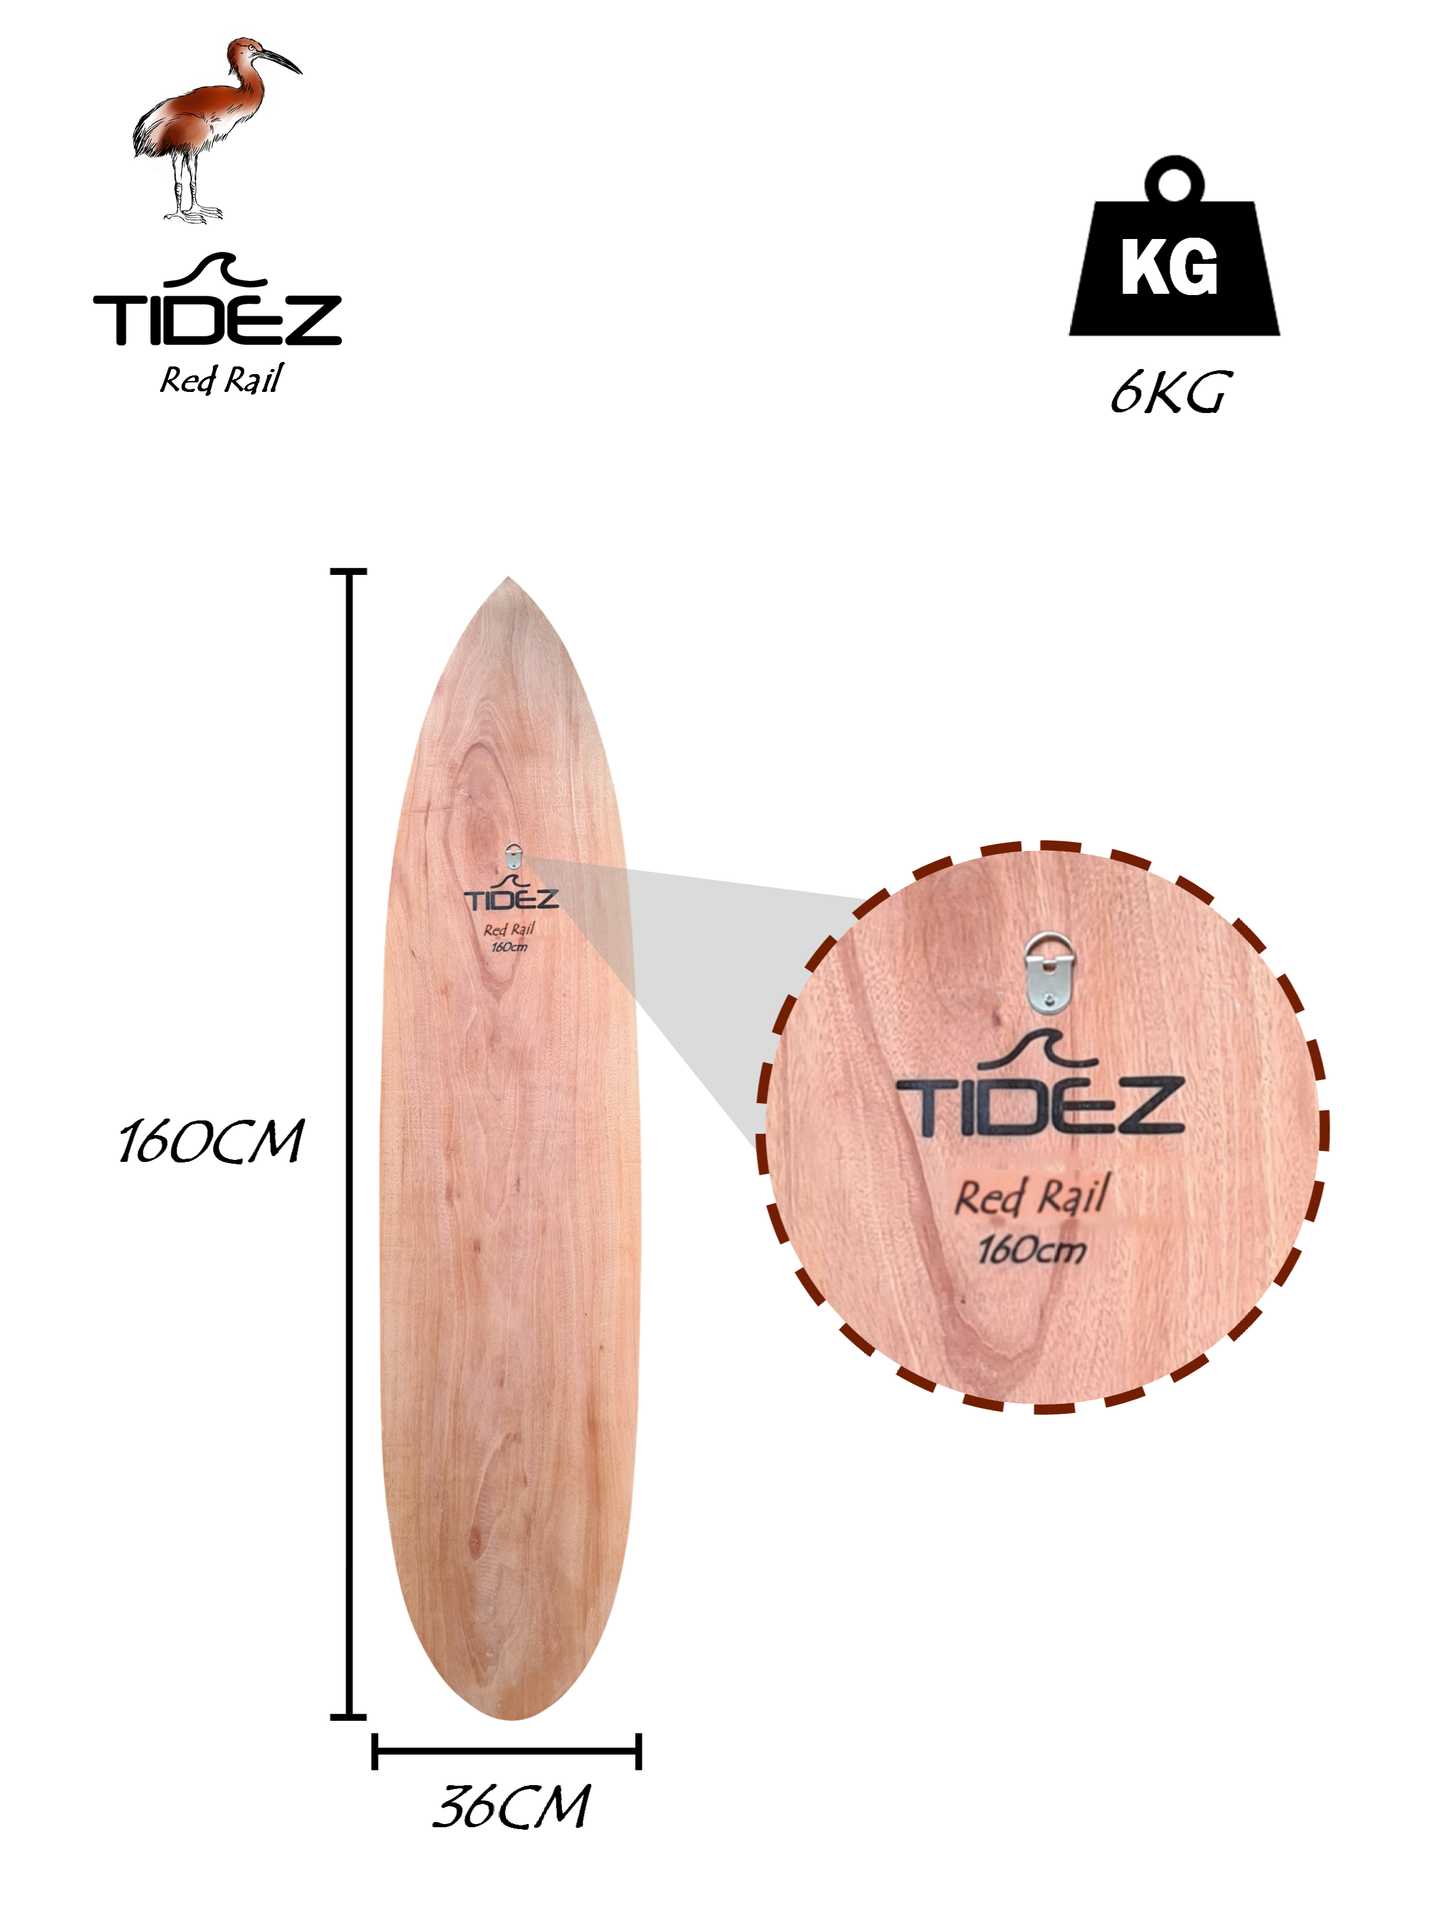 Tidez Red Rail 160cm